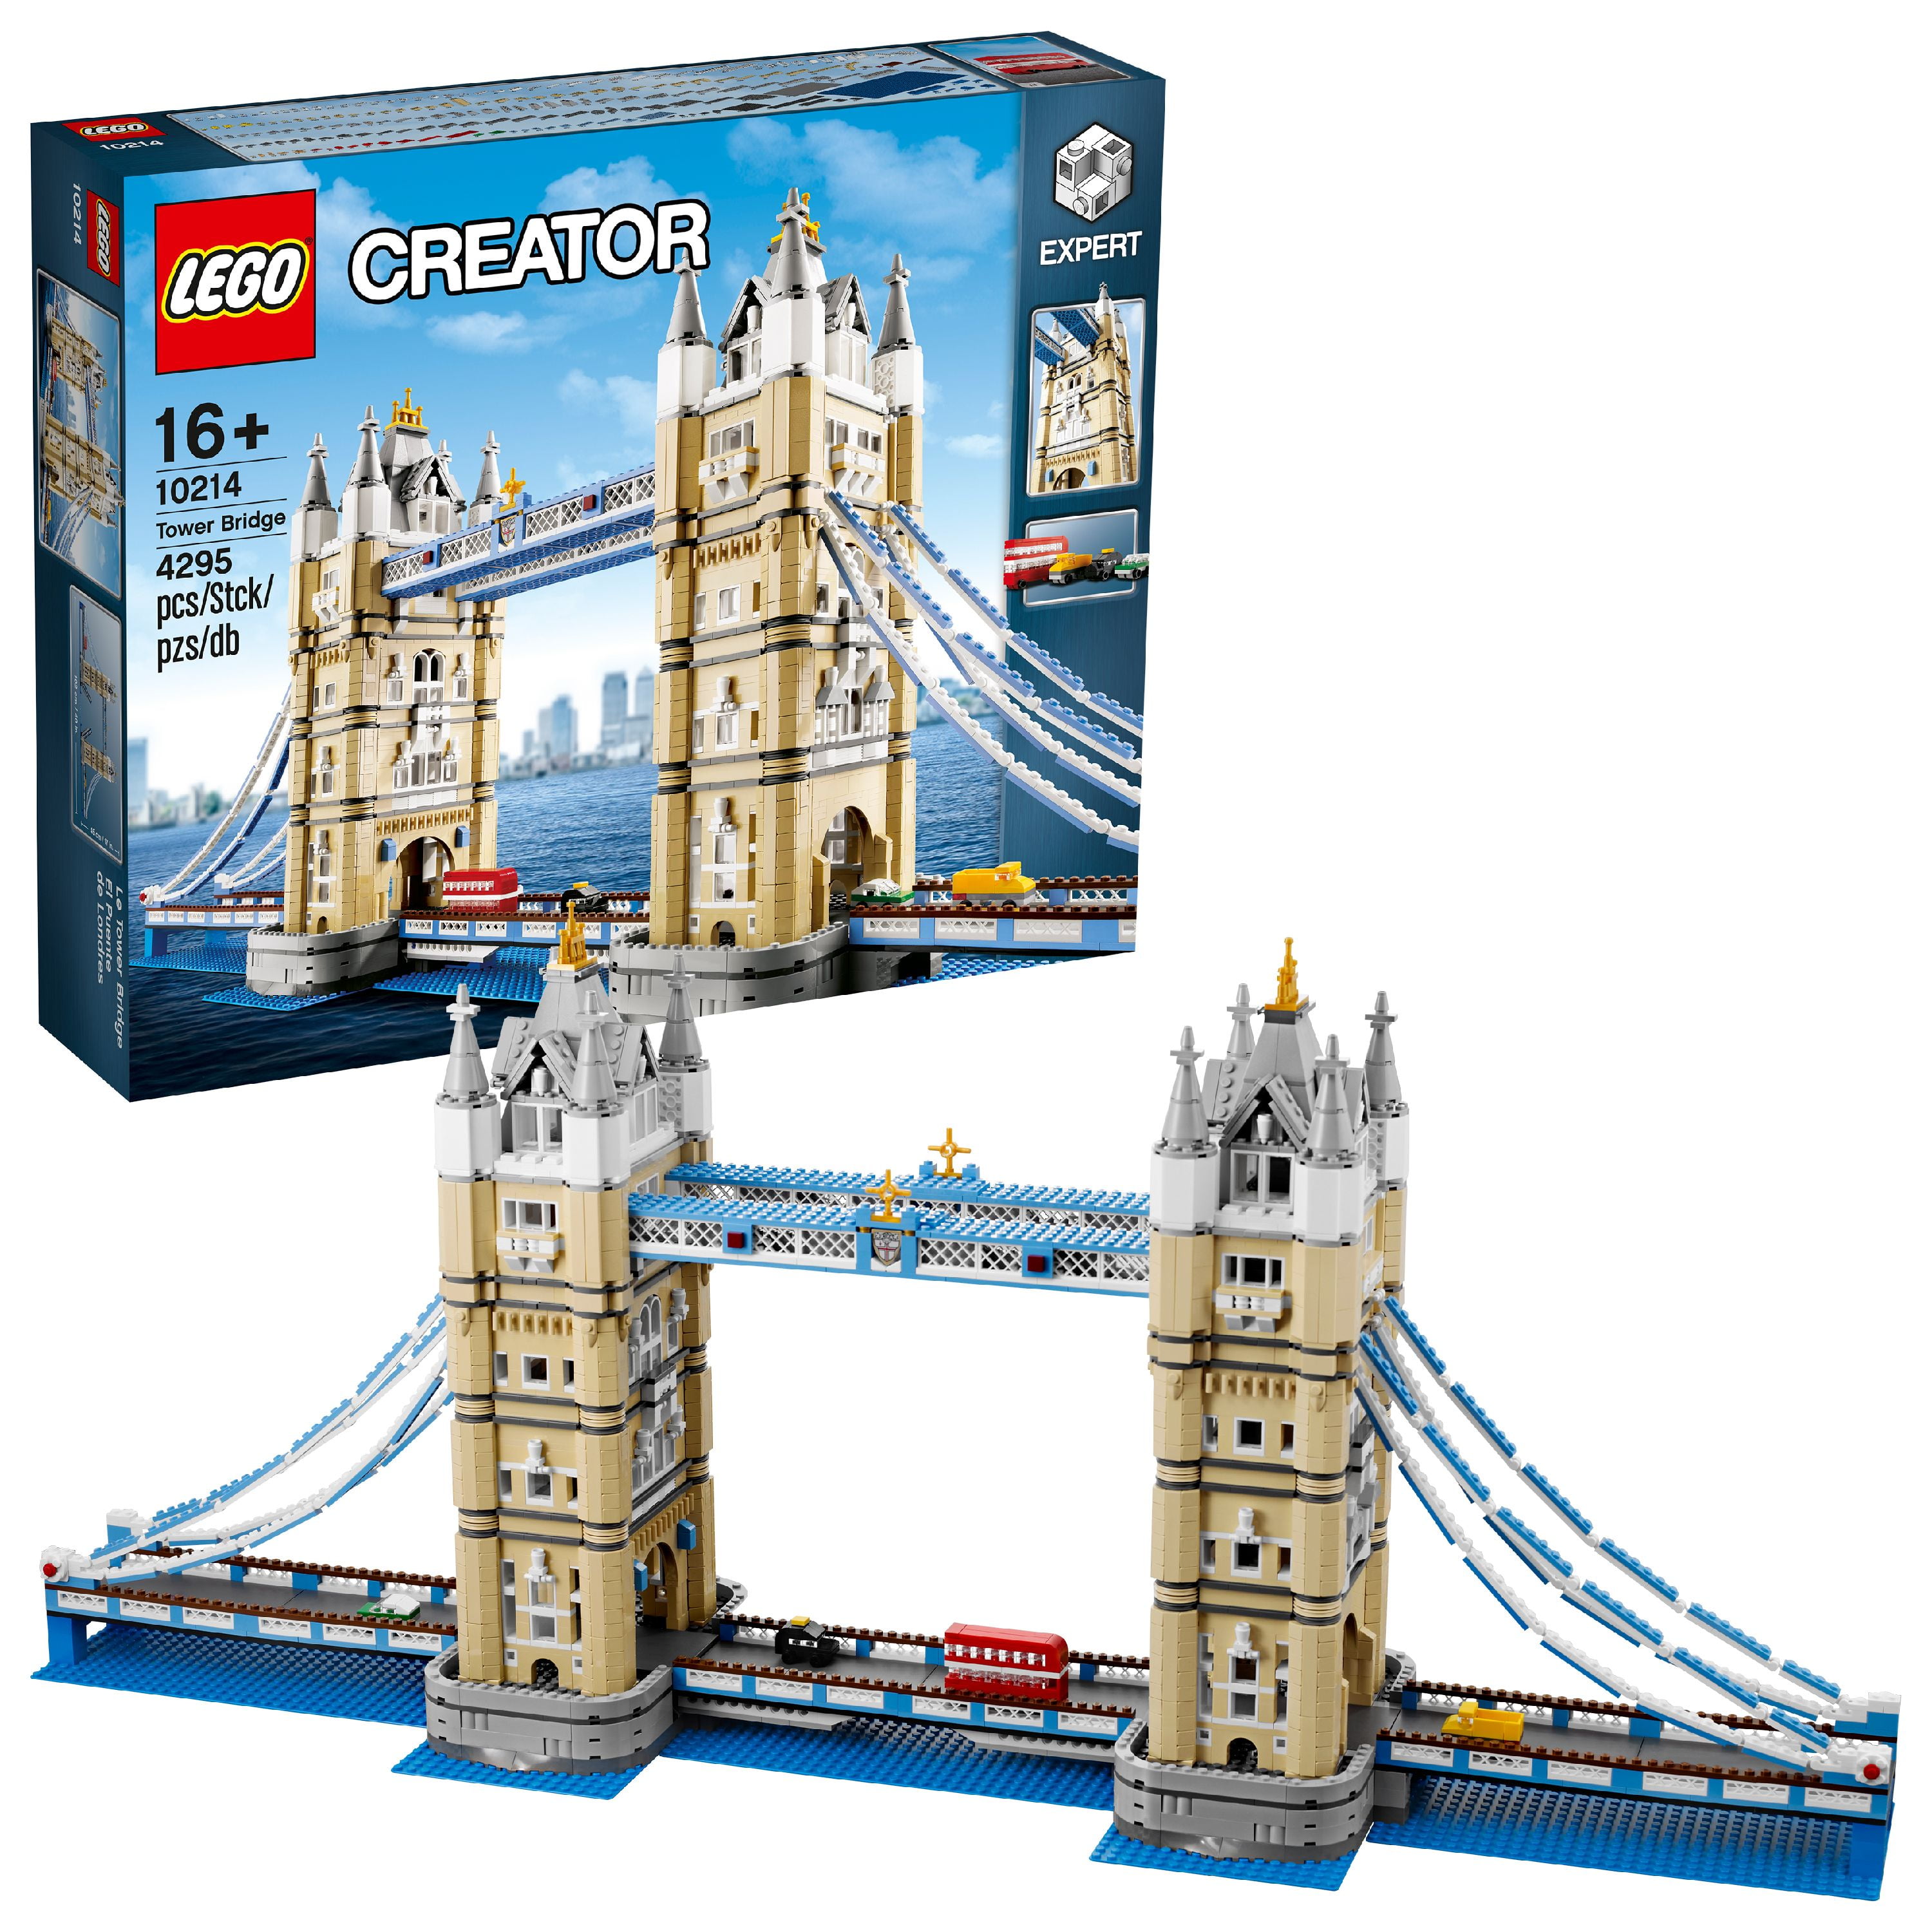 LEGO Creator Expert Tower Bridge (4,295 Pieces) -